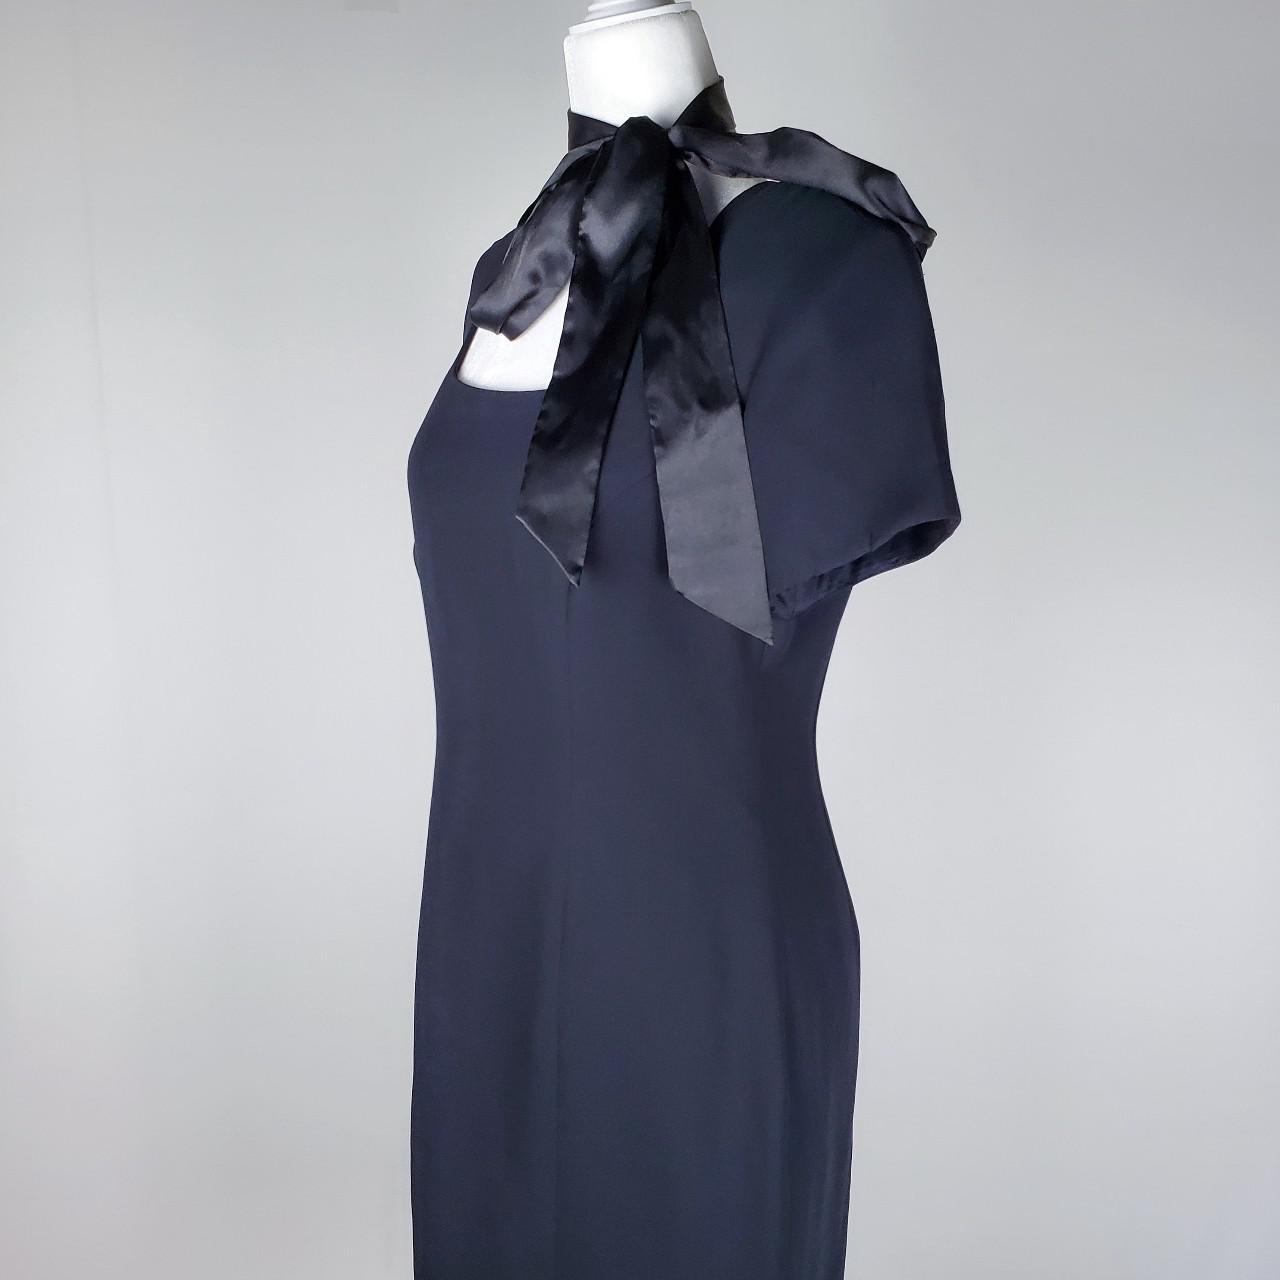 Product Image 2 - Classic Black Dress | Vintage